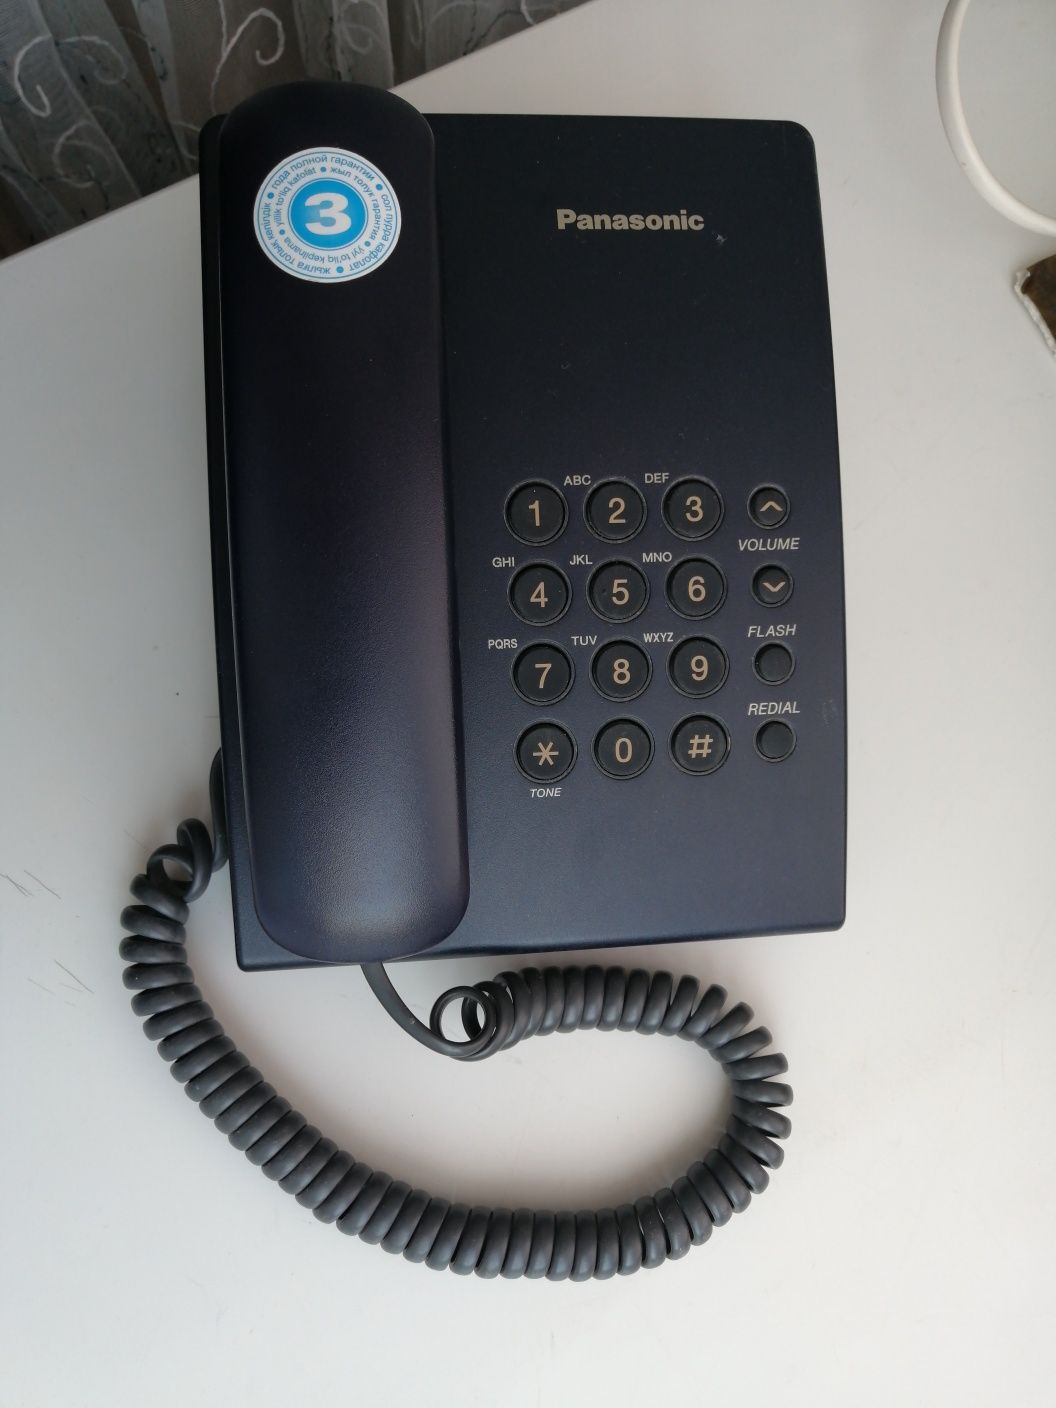 Телефон Panasonic kx-ts2350ca